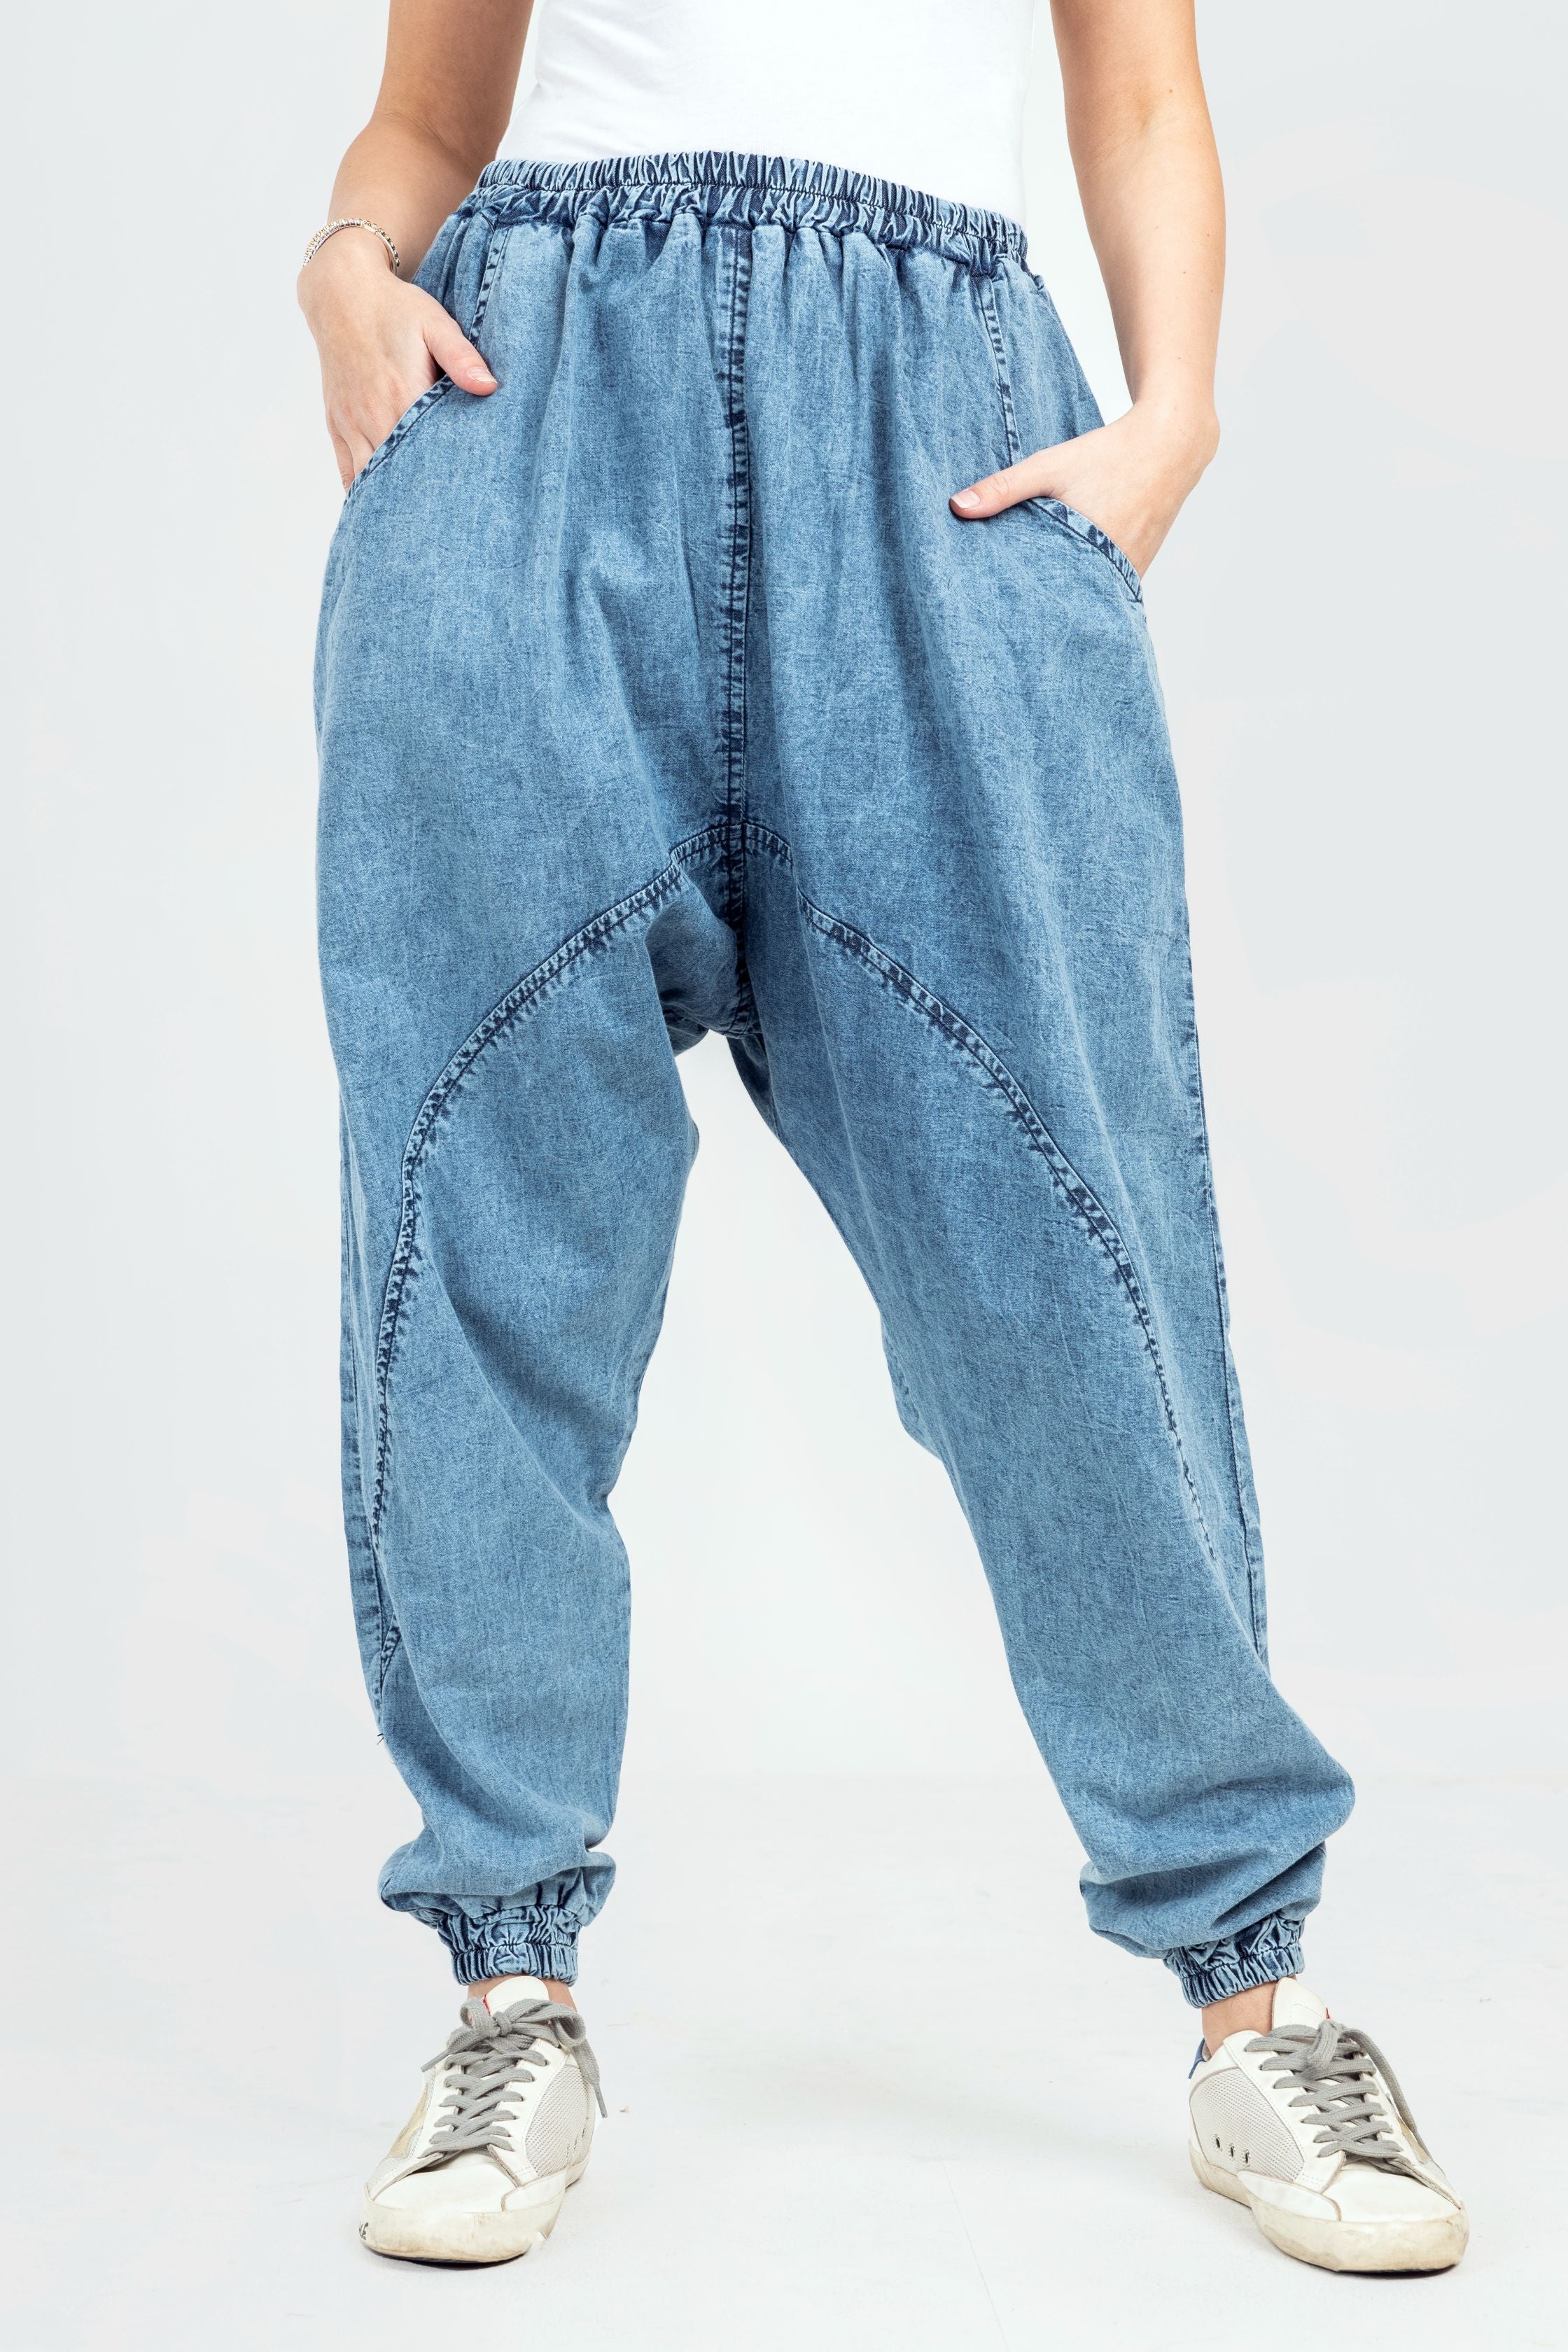 ebossy Women's Denim Harem Pants Elastic Waist Pleated Wide Leg Baggy Jeans  (X-Small, Blue) at Amazon Women's Jeans store